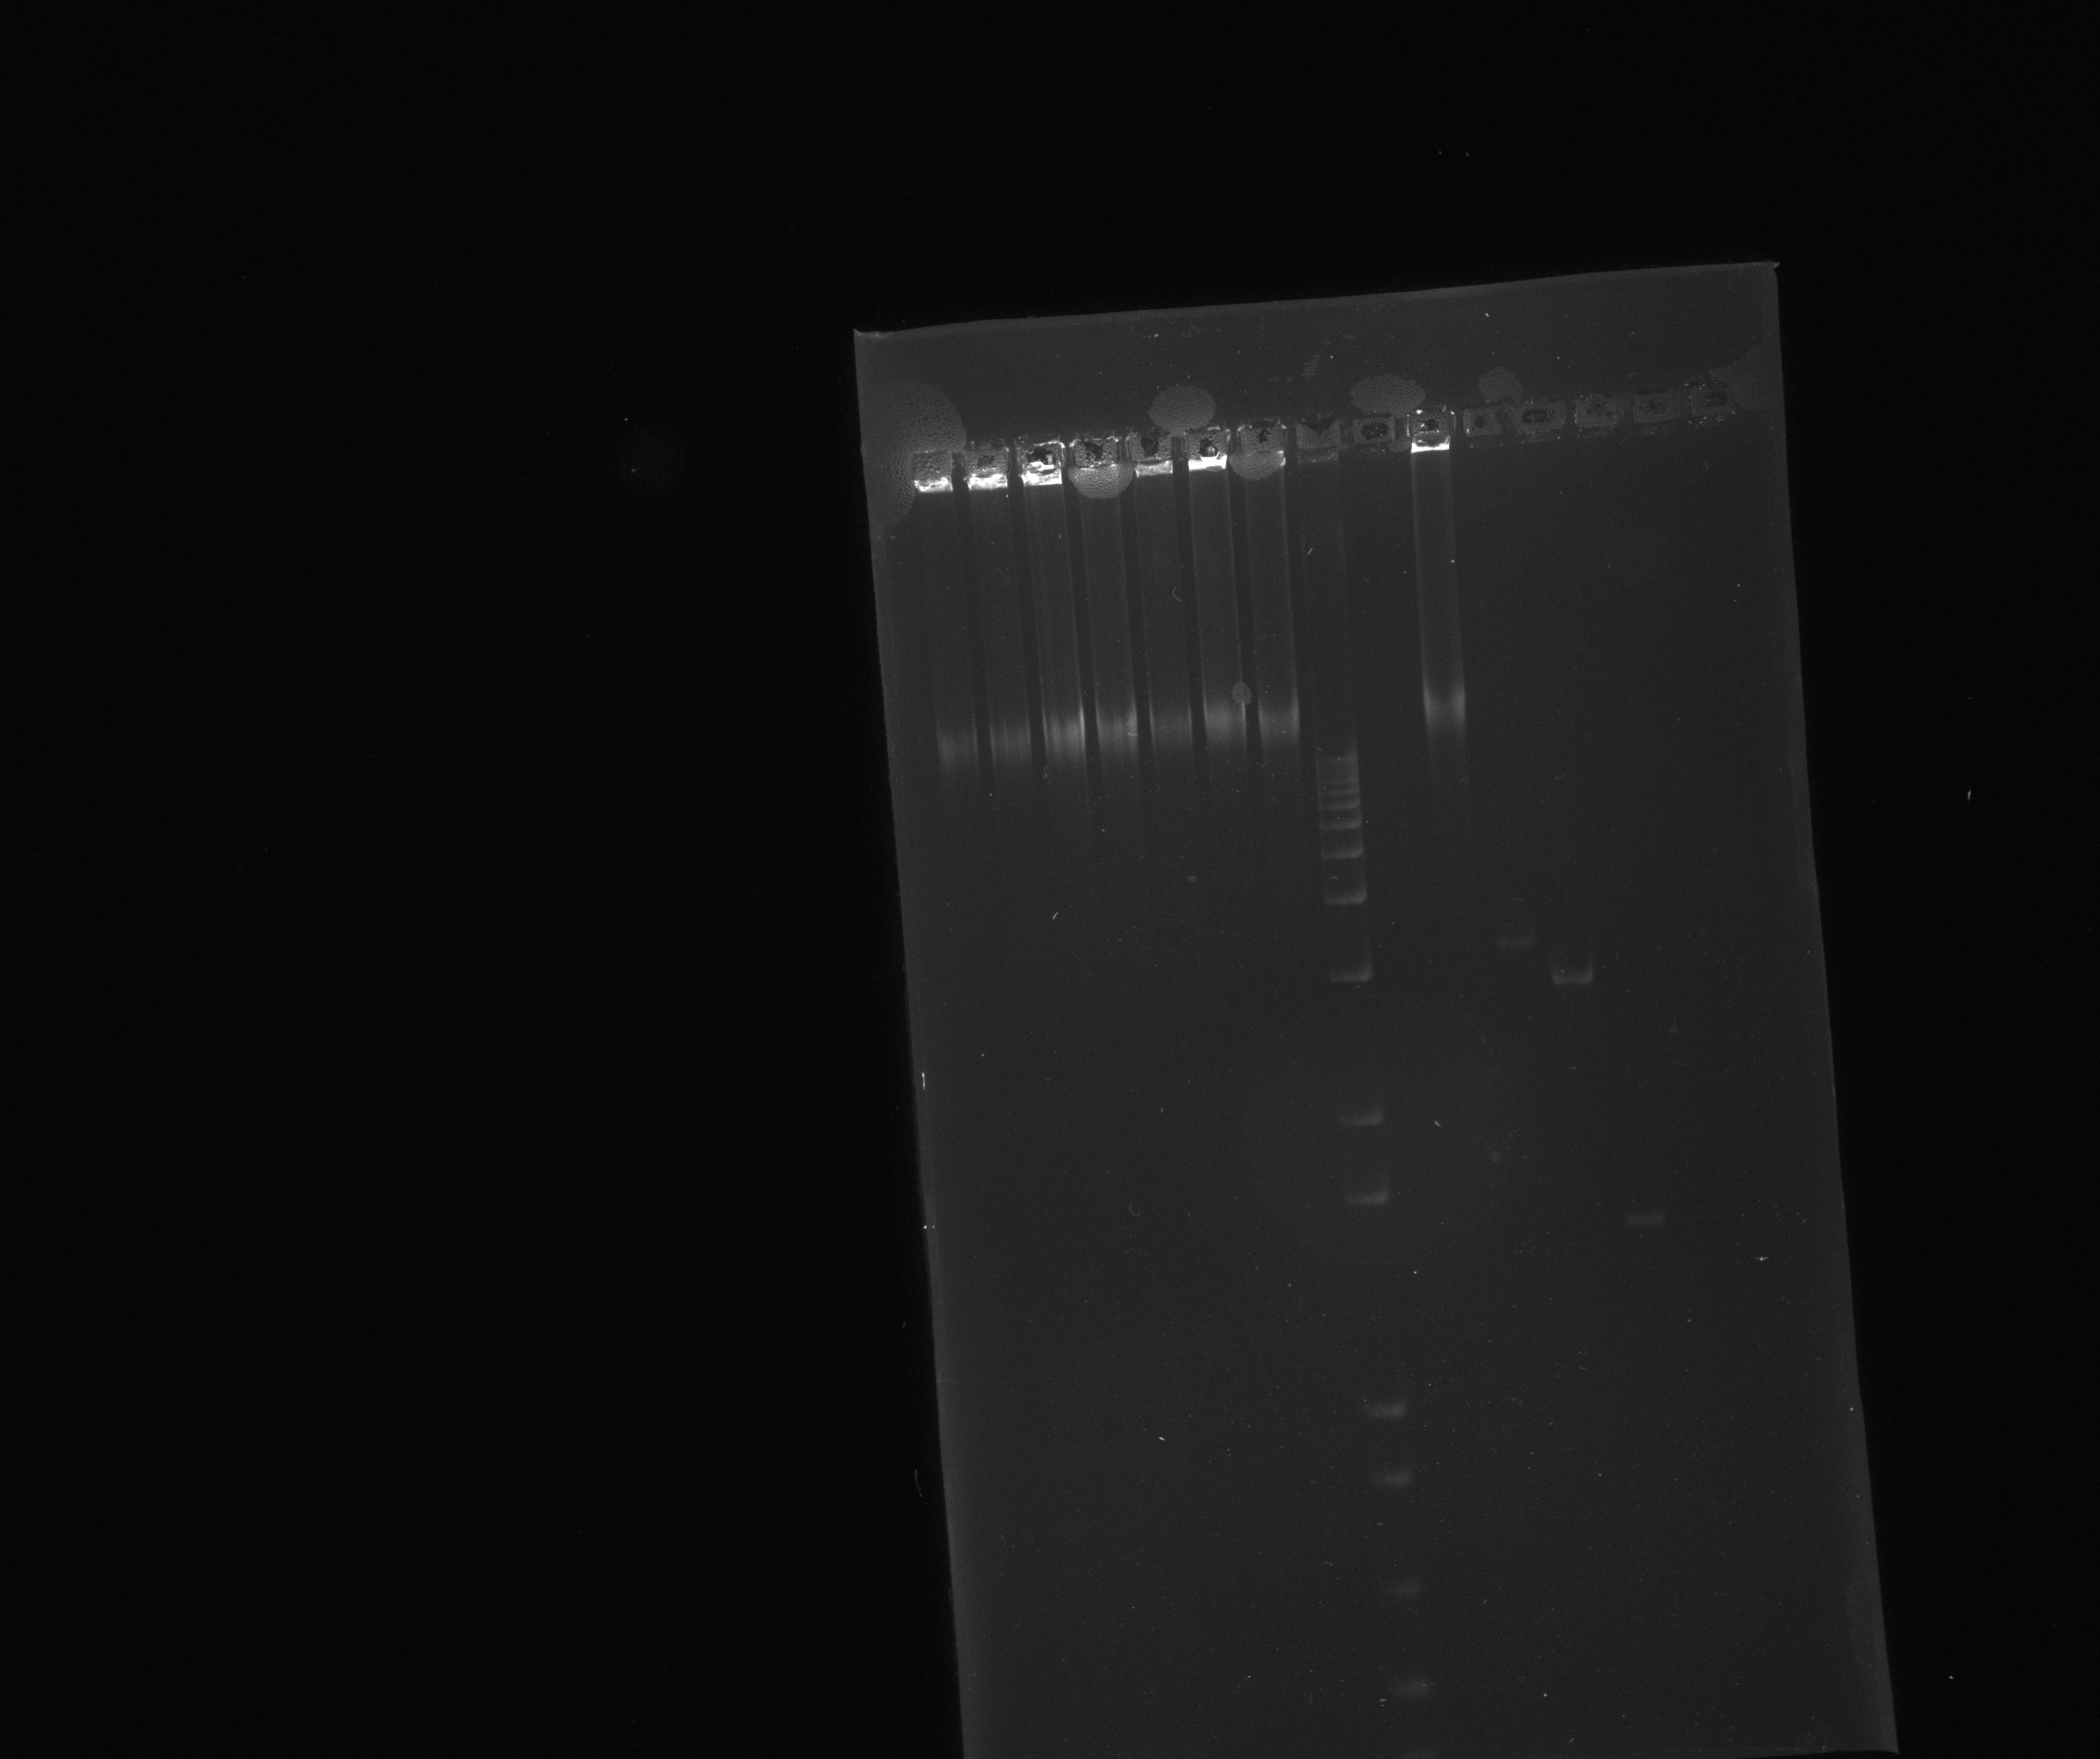 2013-07-09 nir PCR product2.jpg